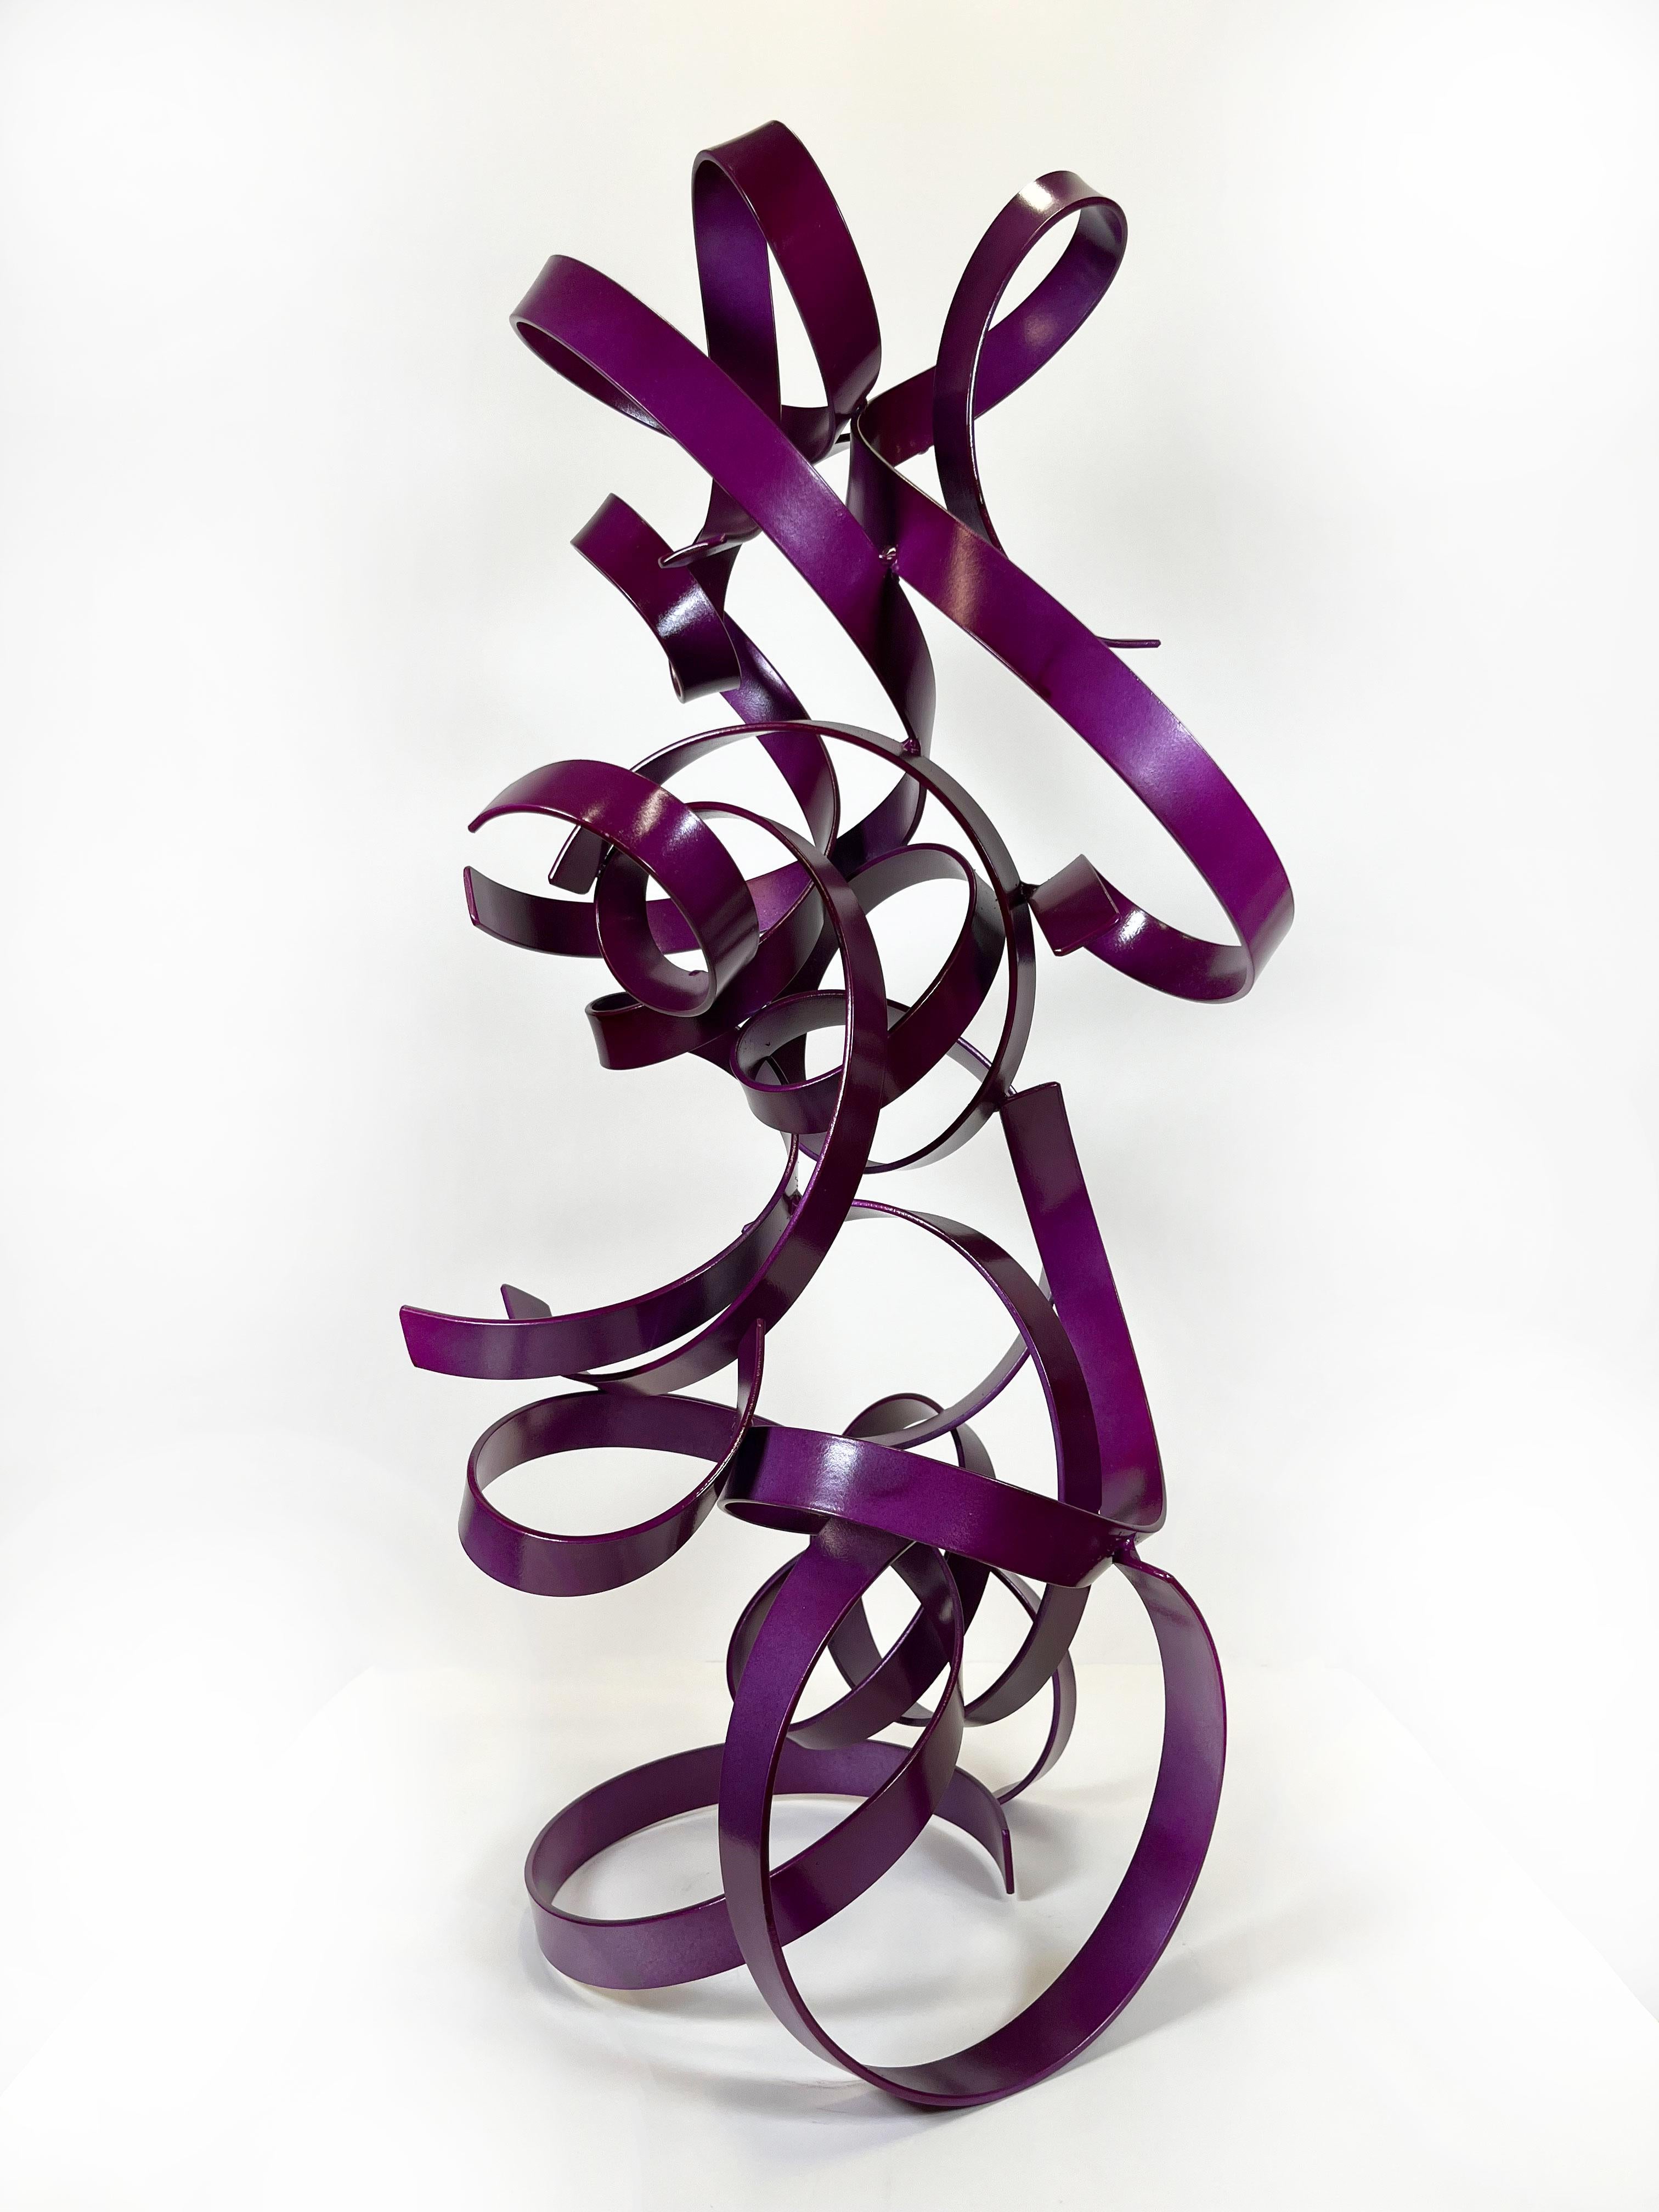 Schöne lila Chaos farbenfrohe Metall 3D-Skulptur aus gebogenem Stahl 